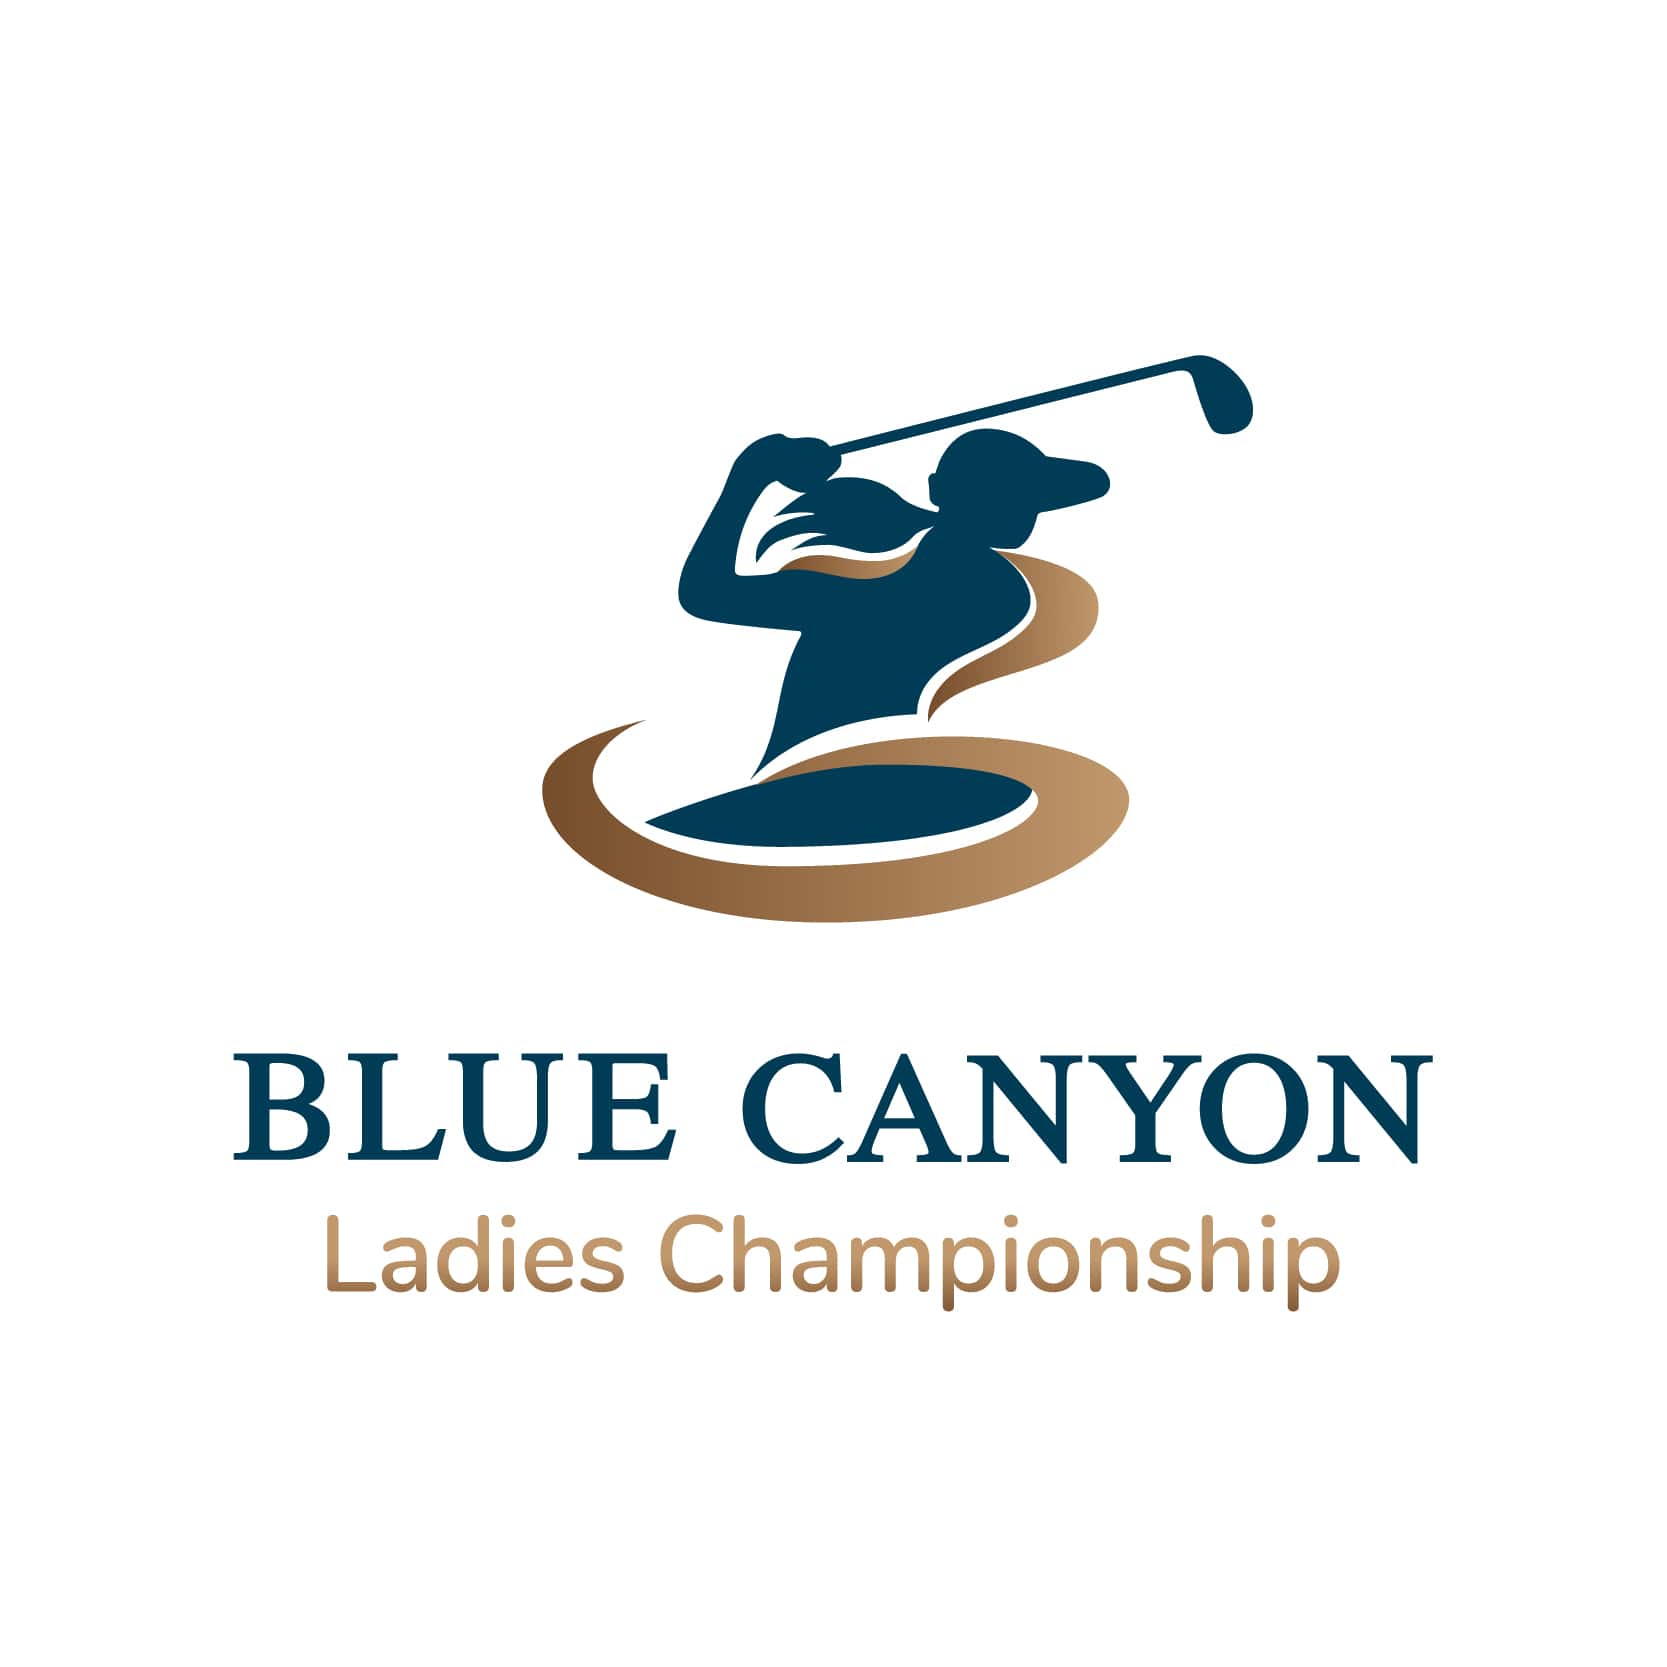 Blue Canyon Ladies Championship